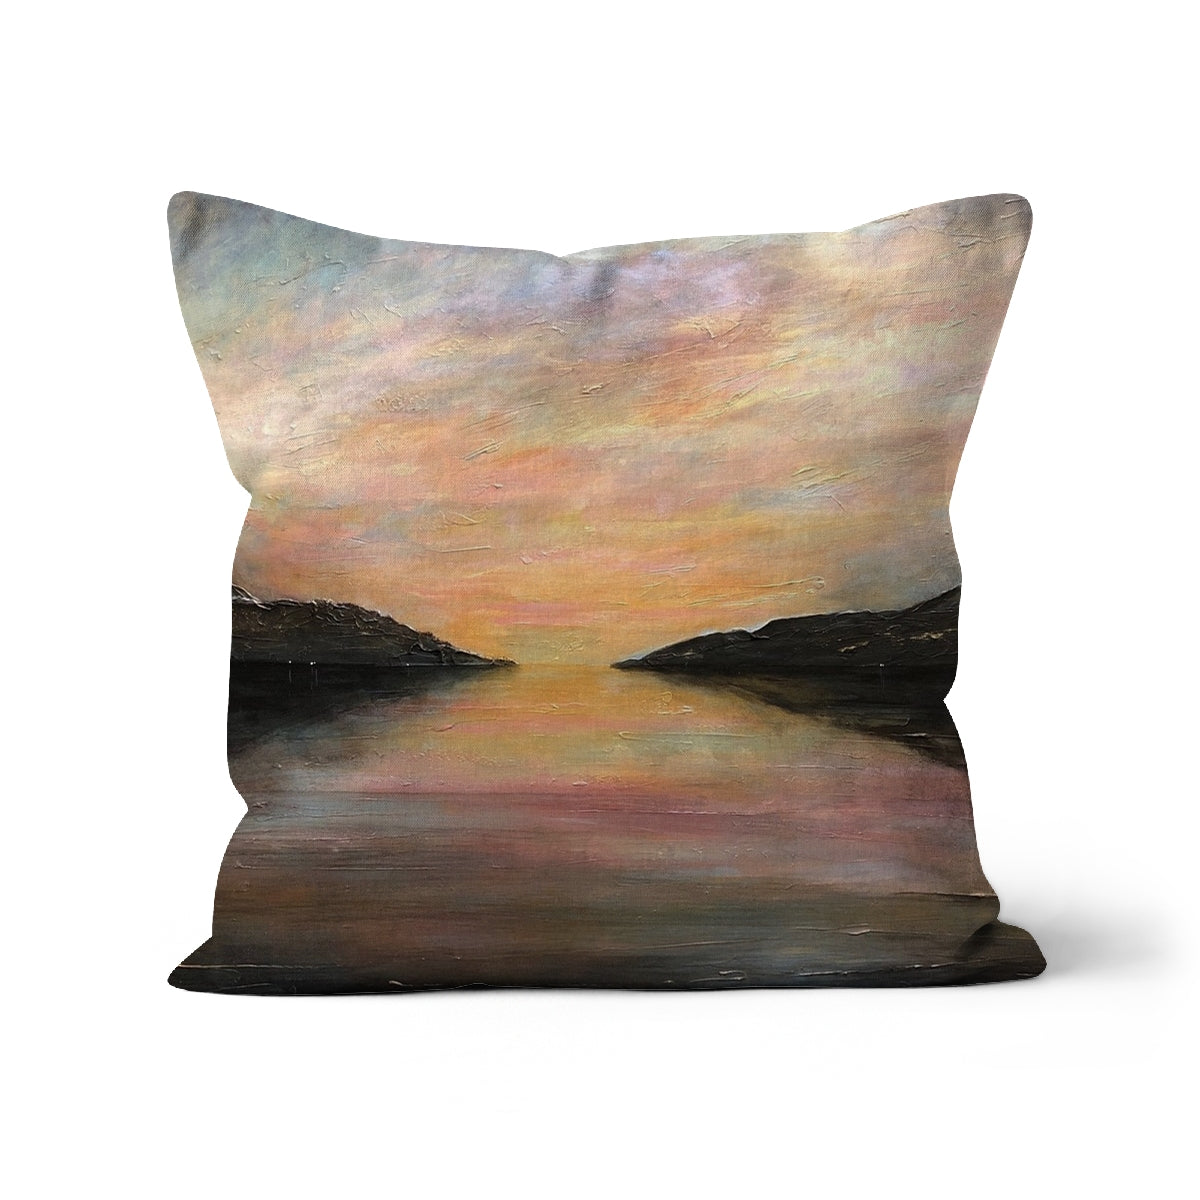 Loch Ness Glow Art Gifts Cushion